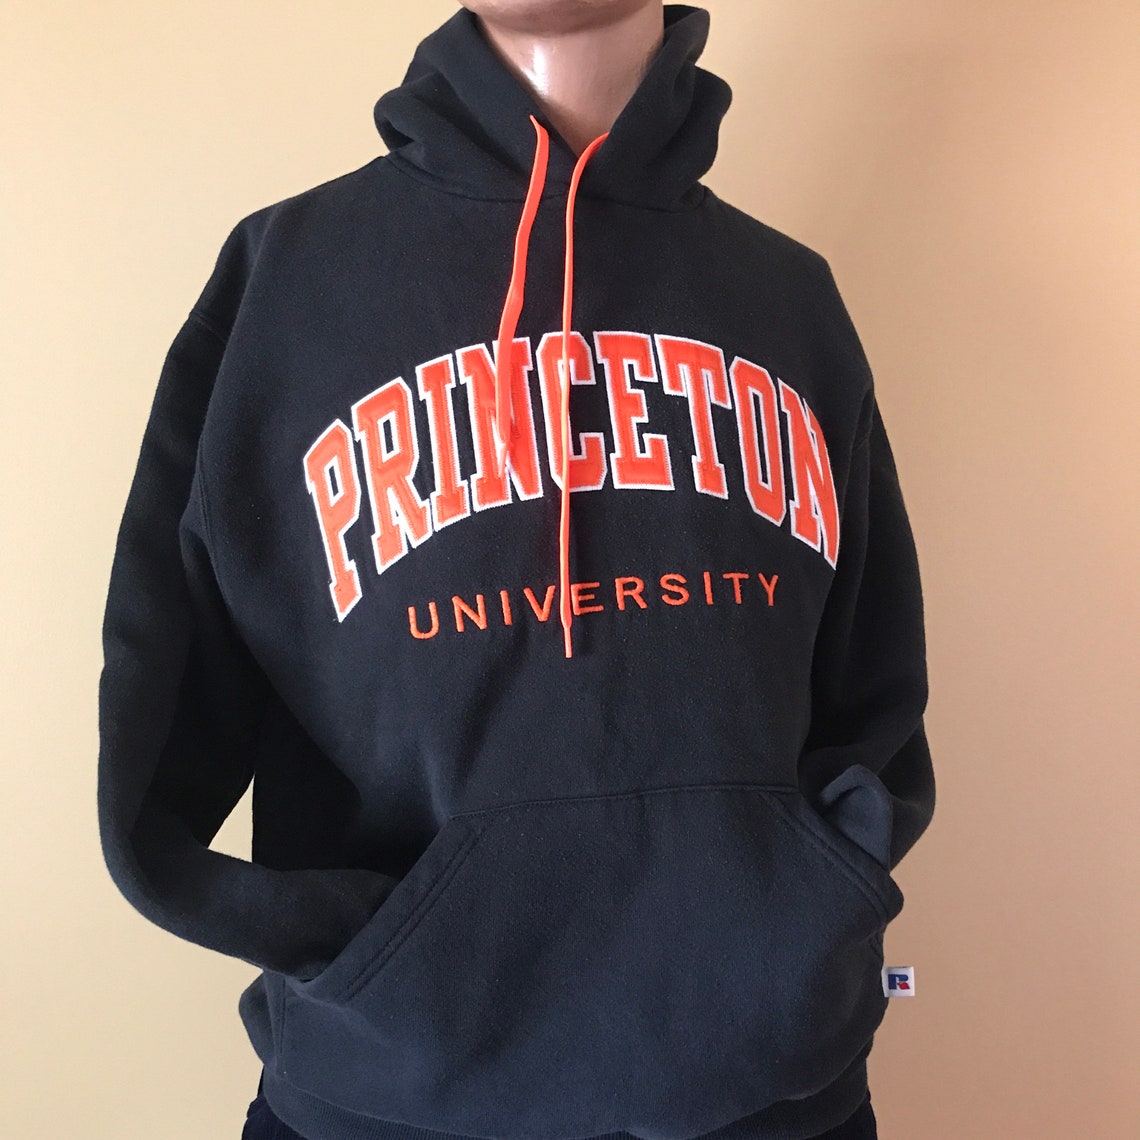 PRINCETON UNIVERSITY vintage hoodie medium | Etsy